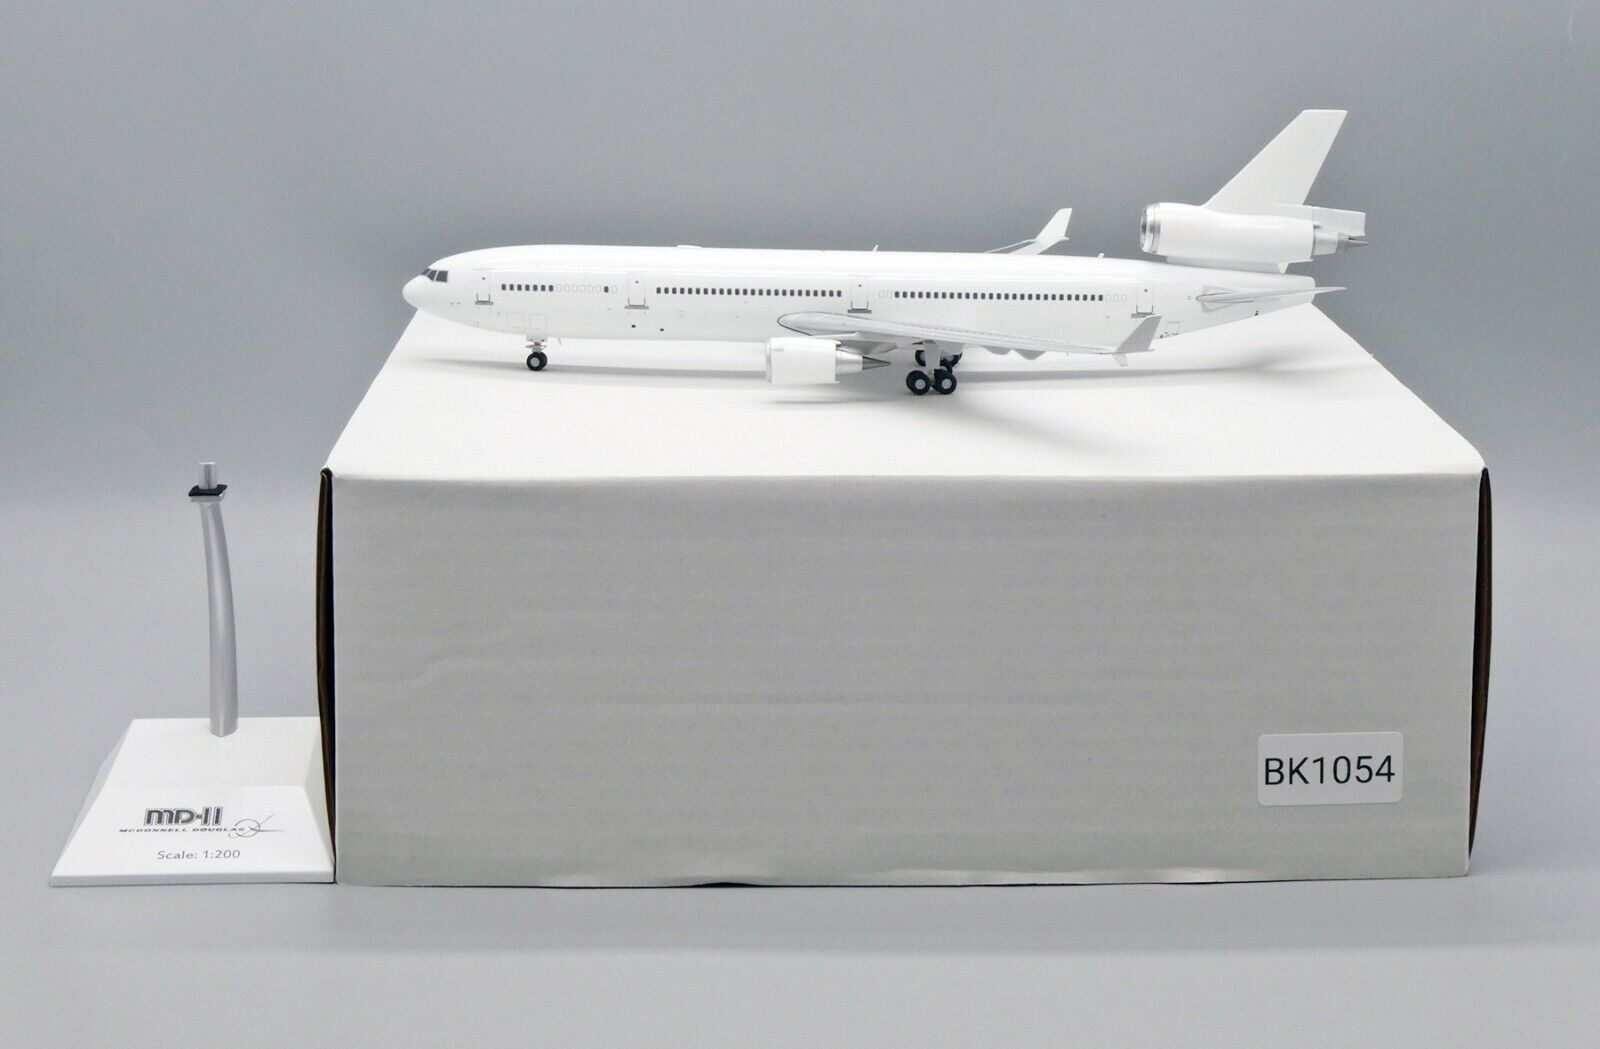 Blank MD-11 \'\'Blank series\'\' JC Wings Scale 1:200 Diecast model BK1054 